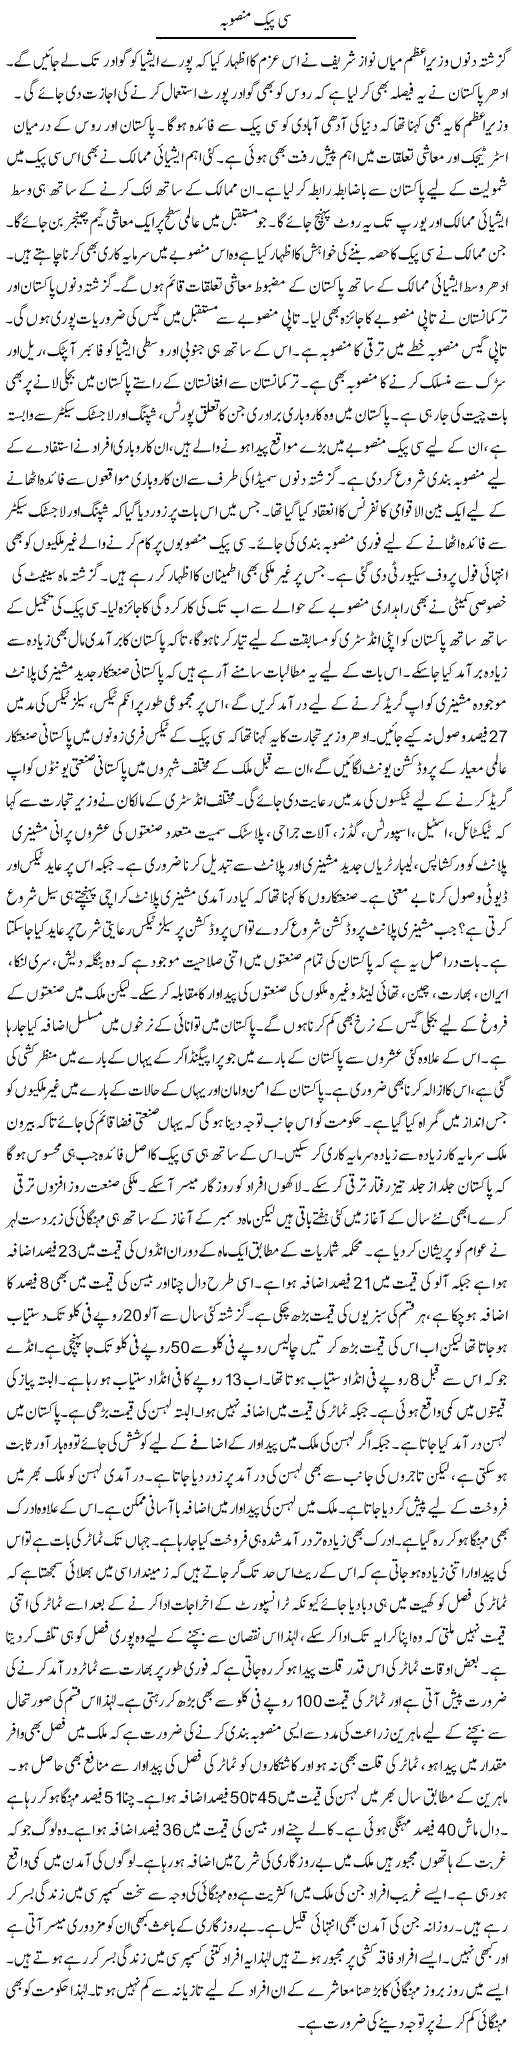 CPEC Mansooba | M.I Khalil | Daily Urdu Columns